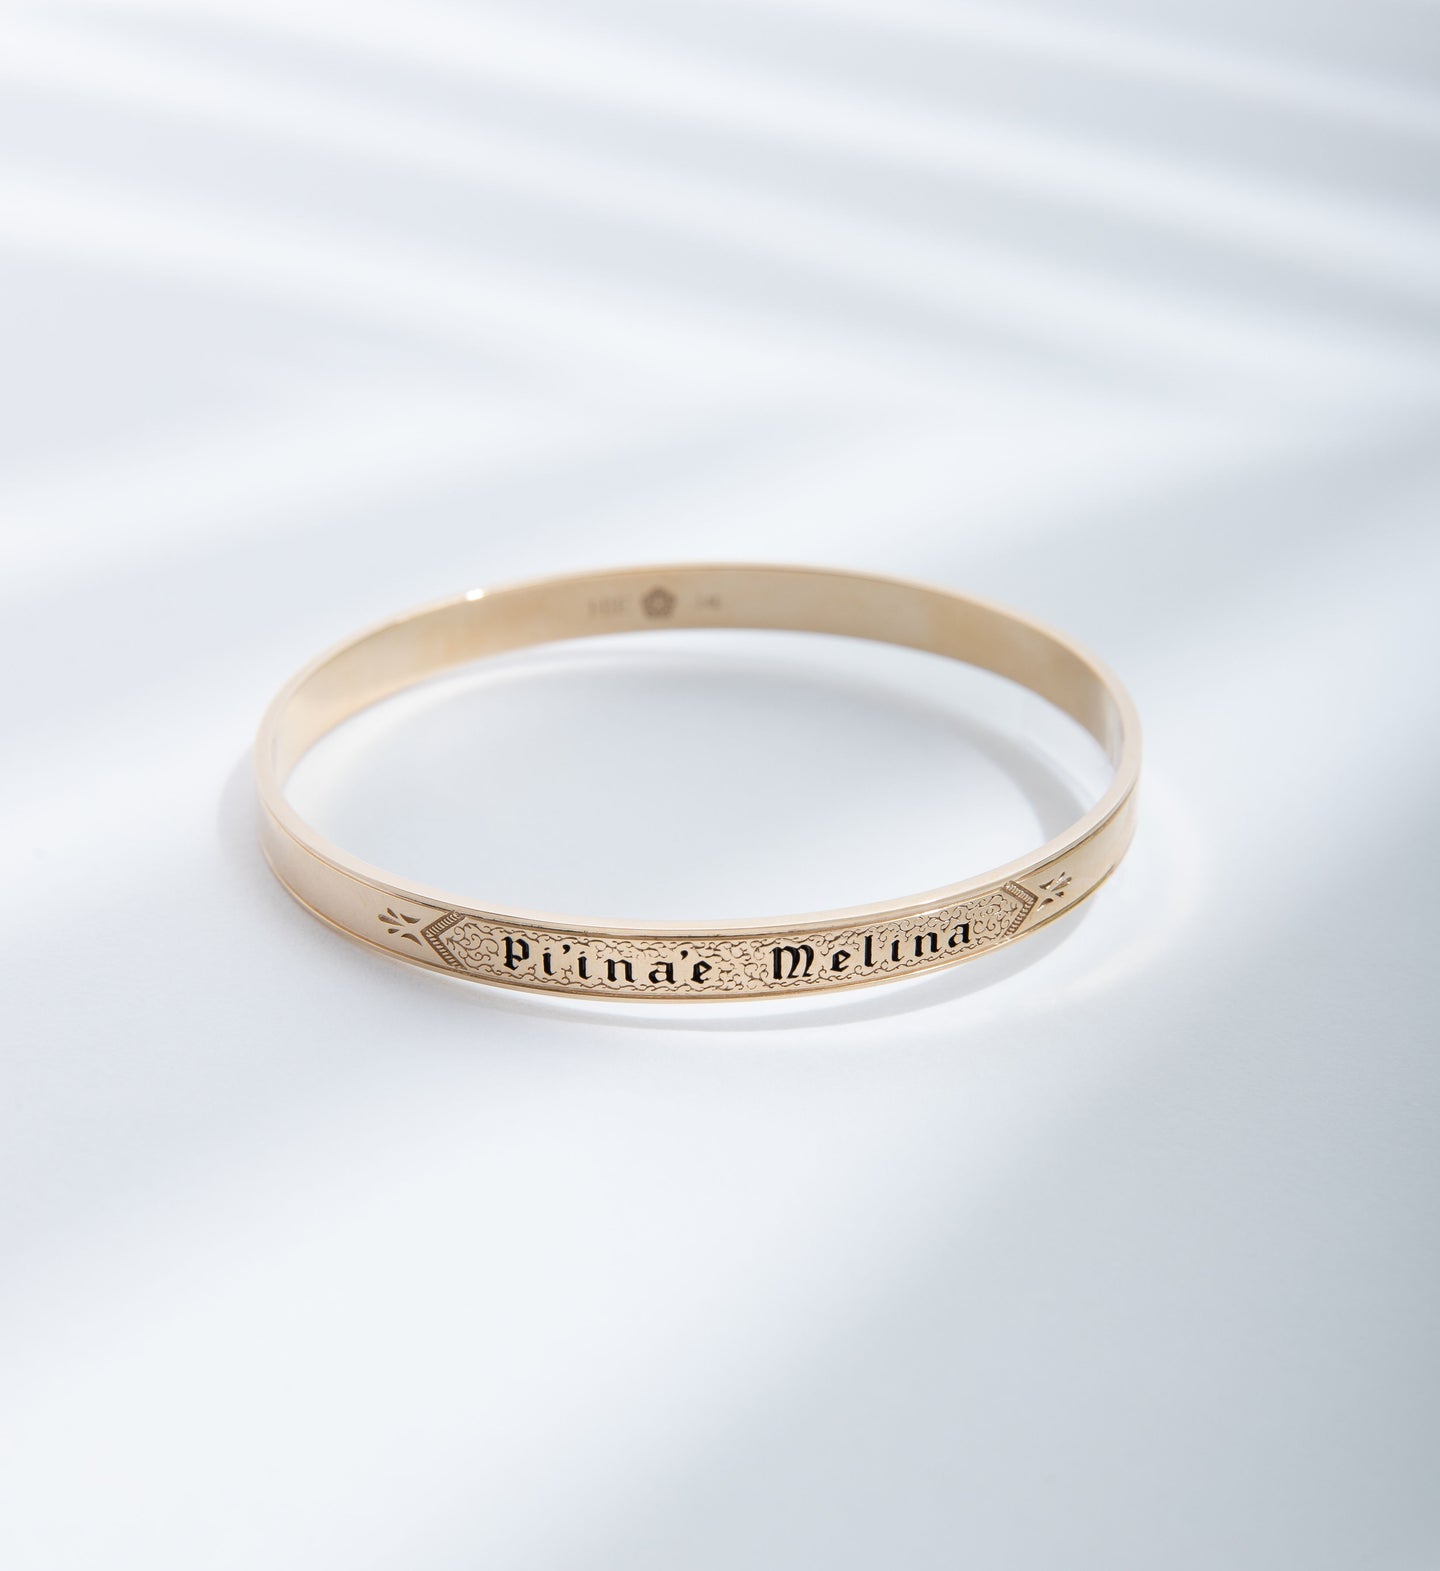 Hie Li’ili’i gold bangle bracelet with engraving